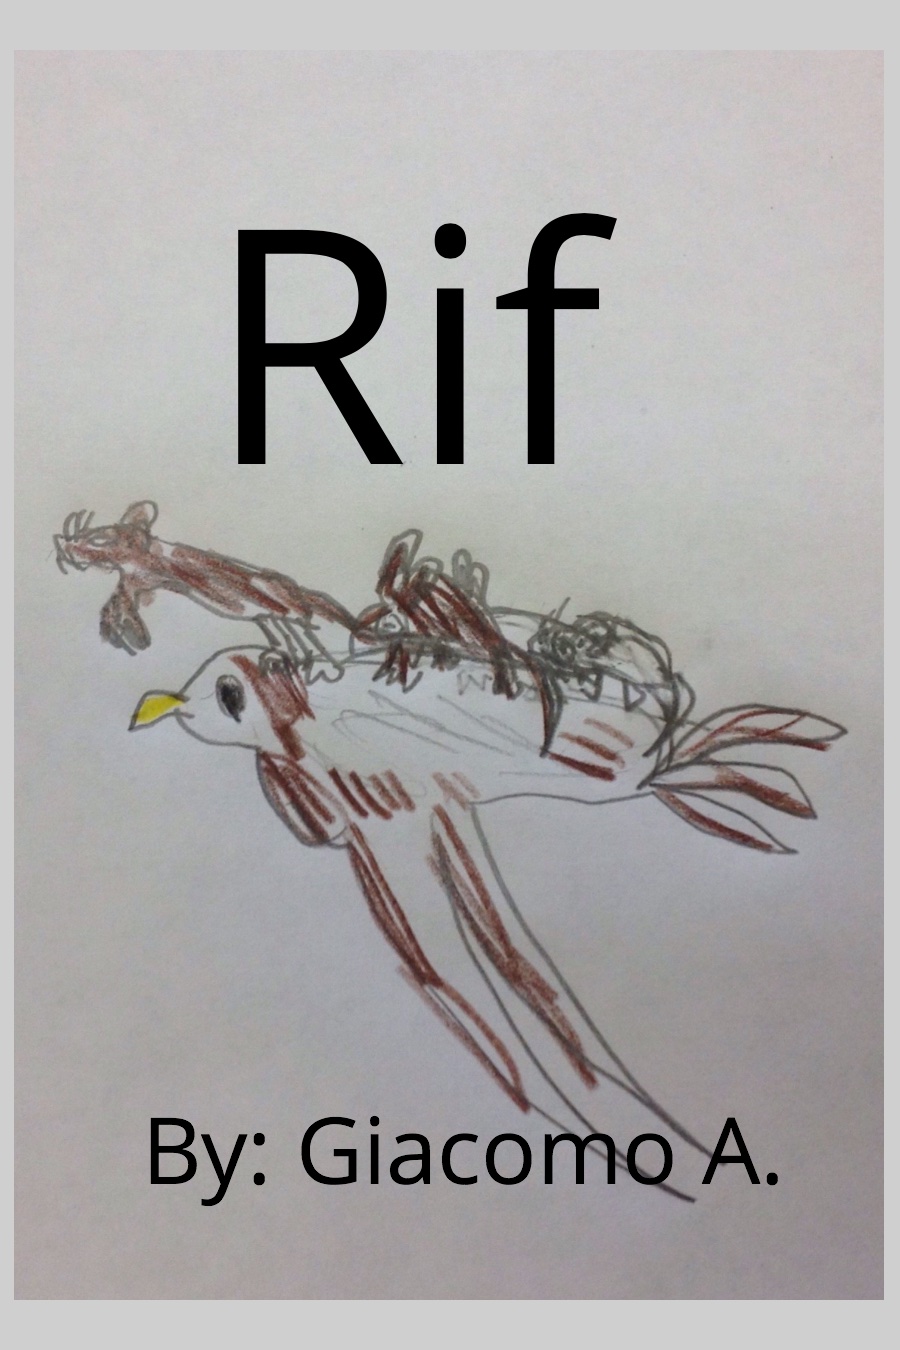 Rif by Giacomo A